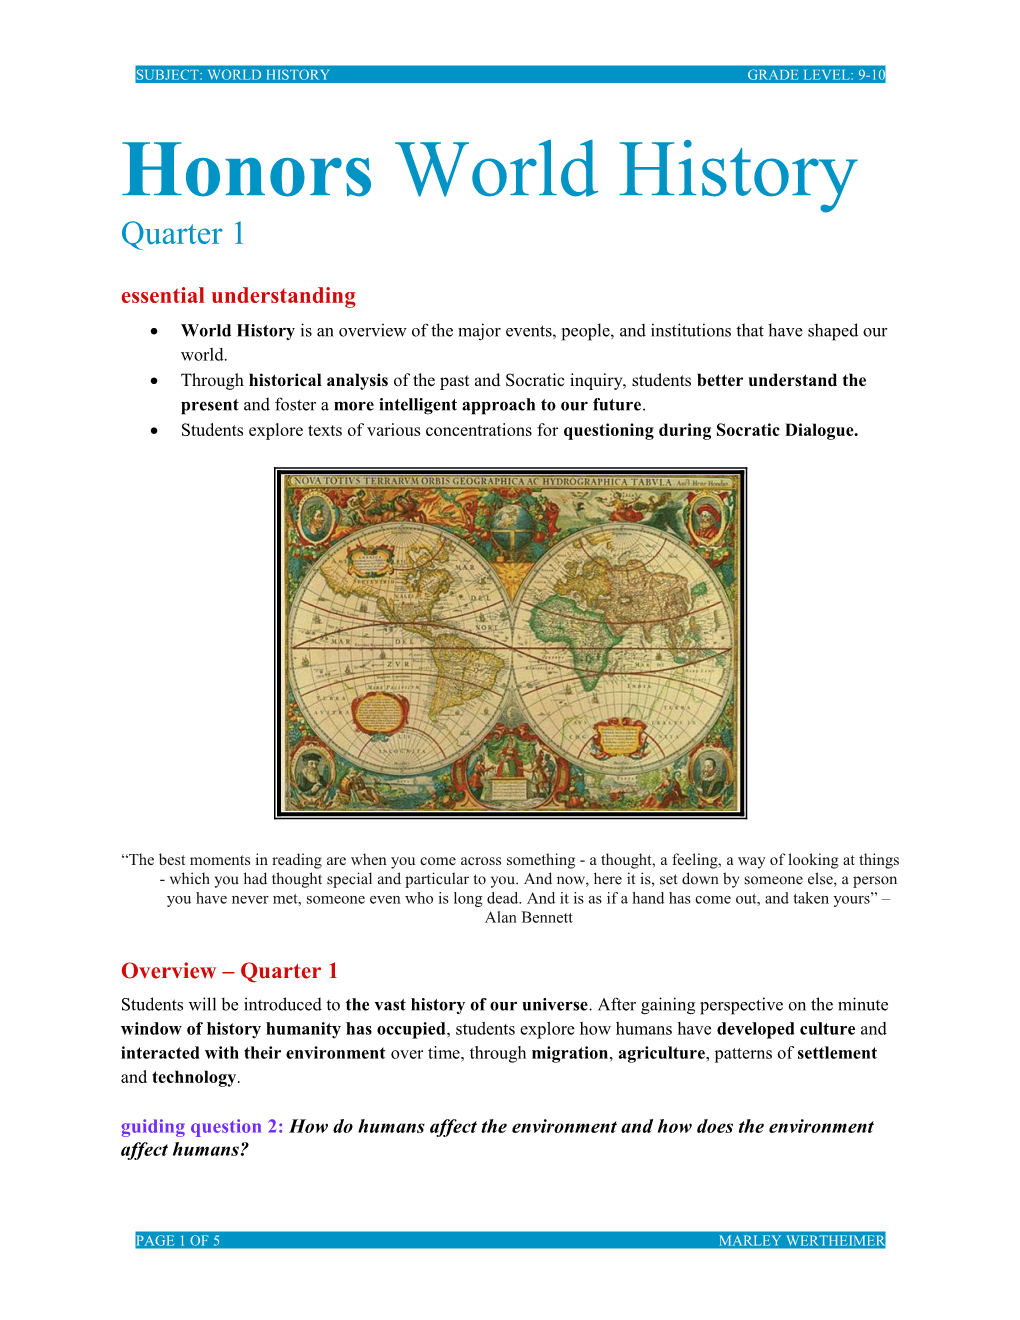 World History Quarter 1